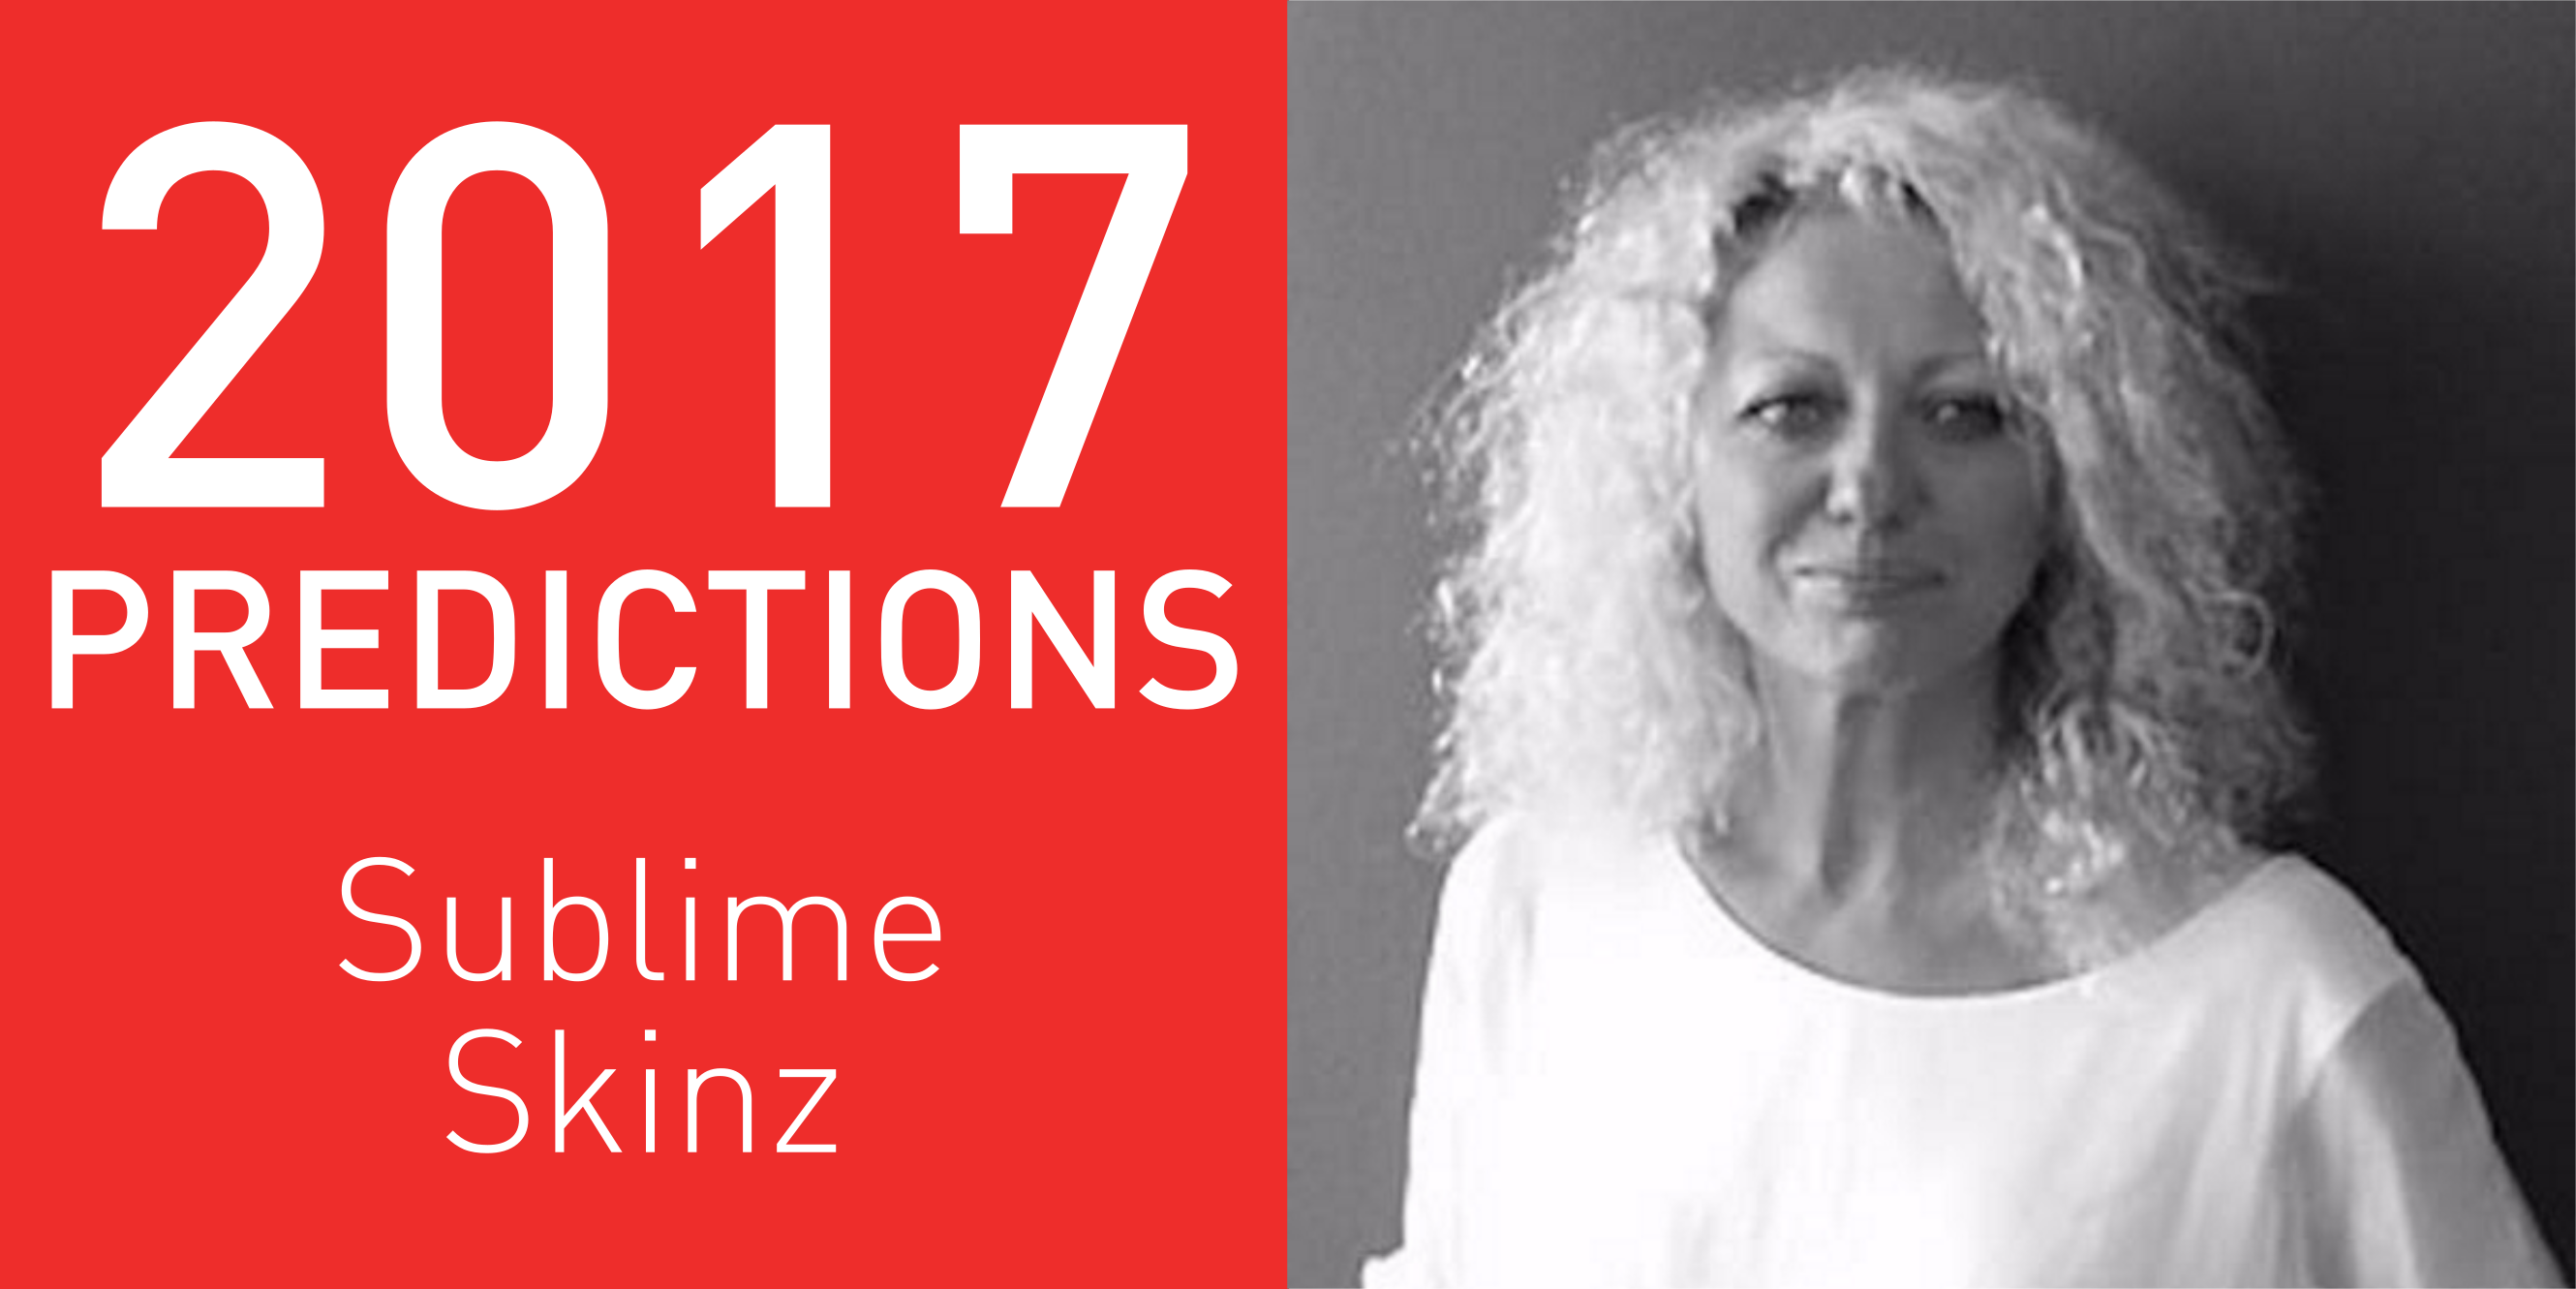 2017 predictions Sublime Skinz